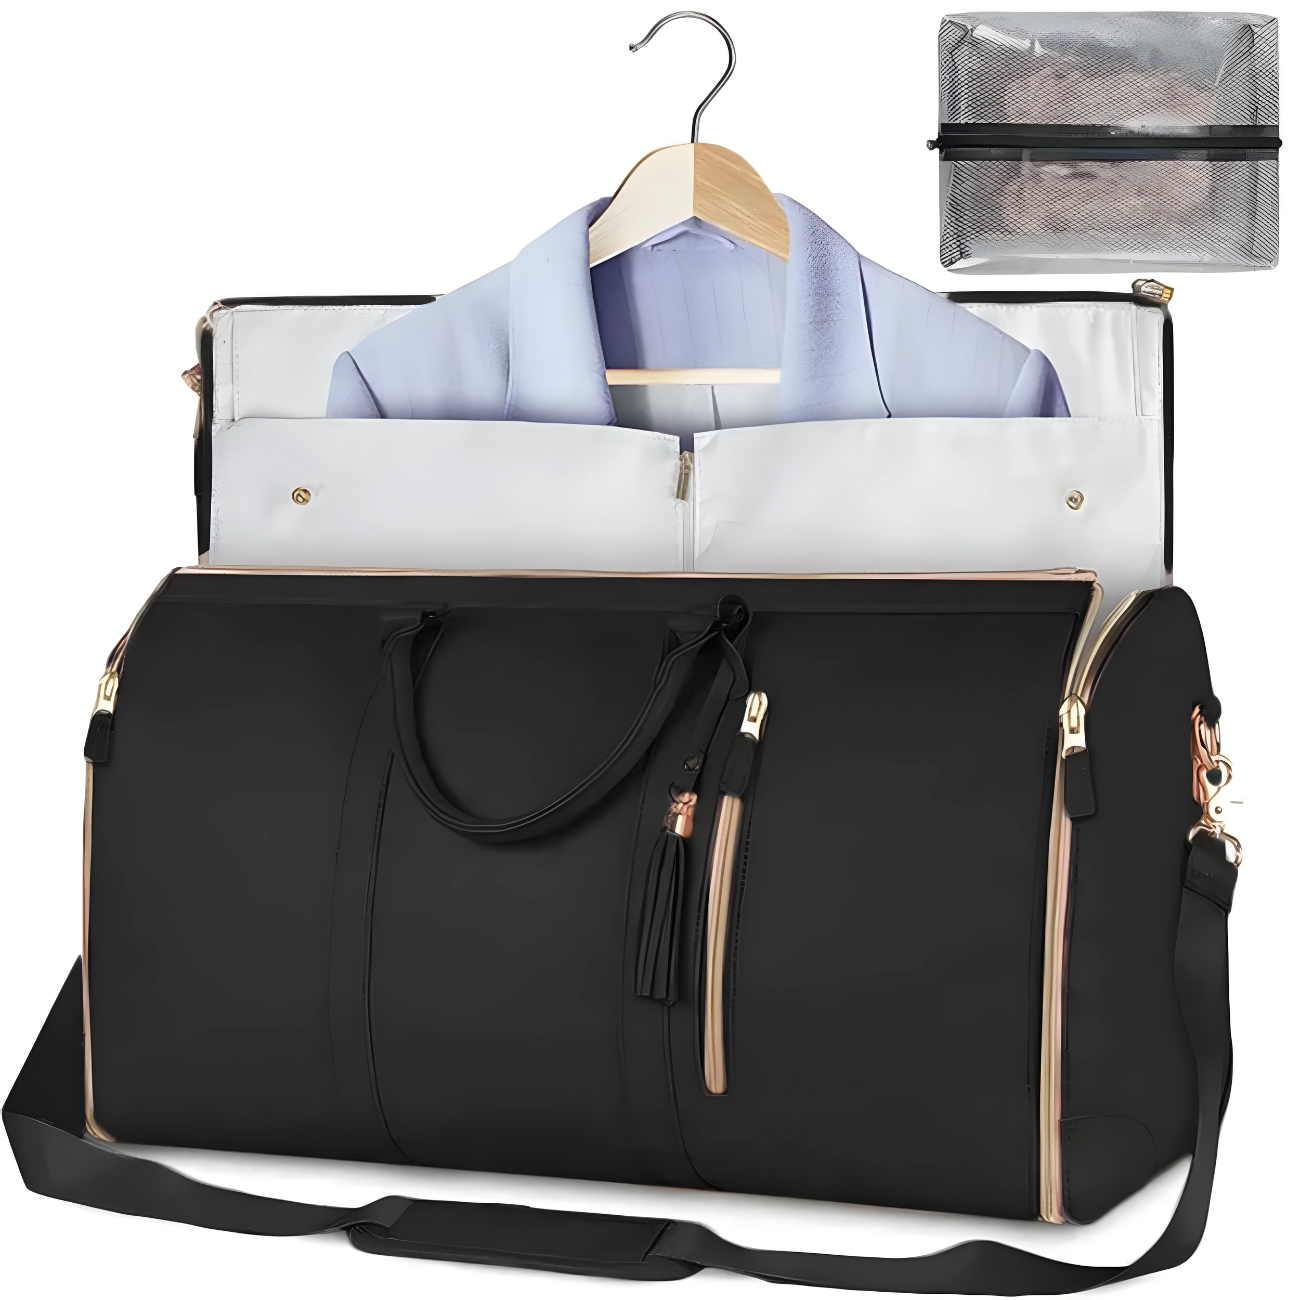 Northeaven - Travel Bag